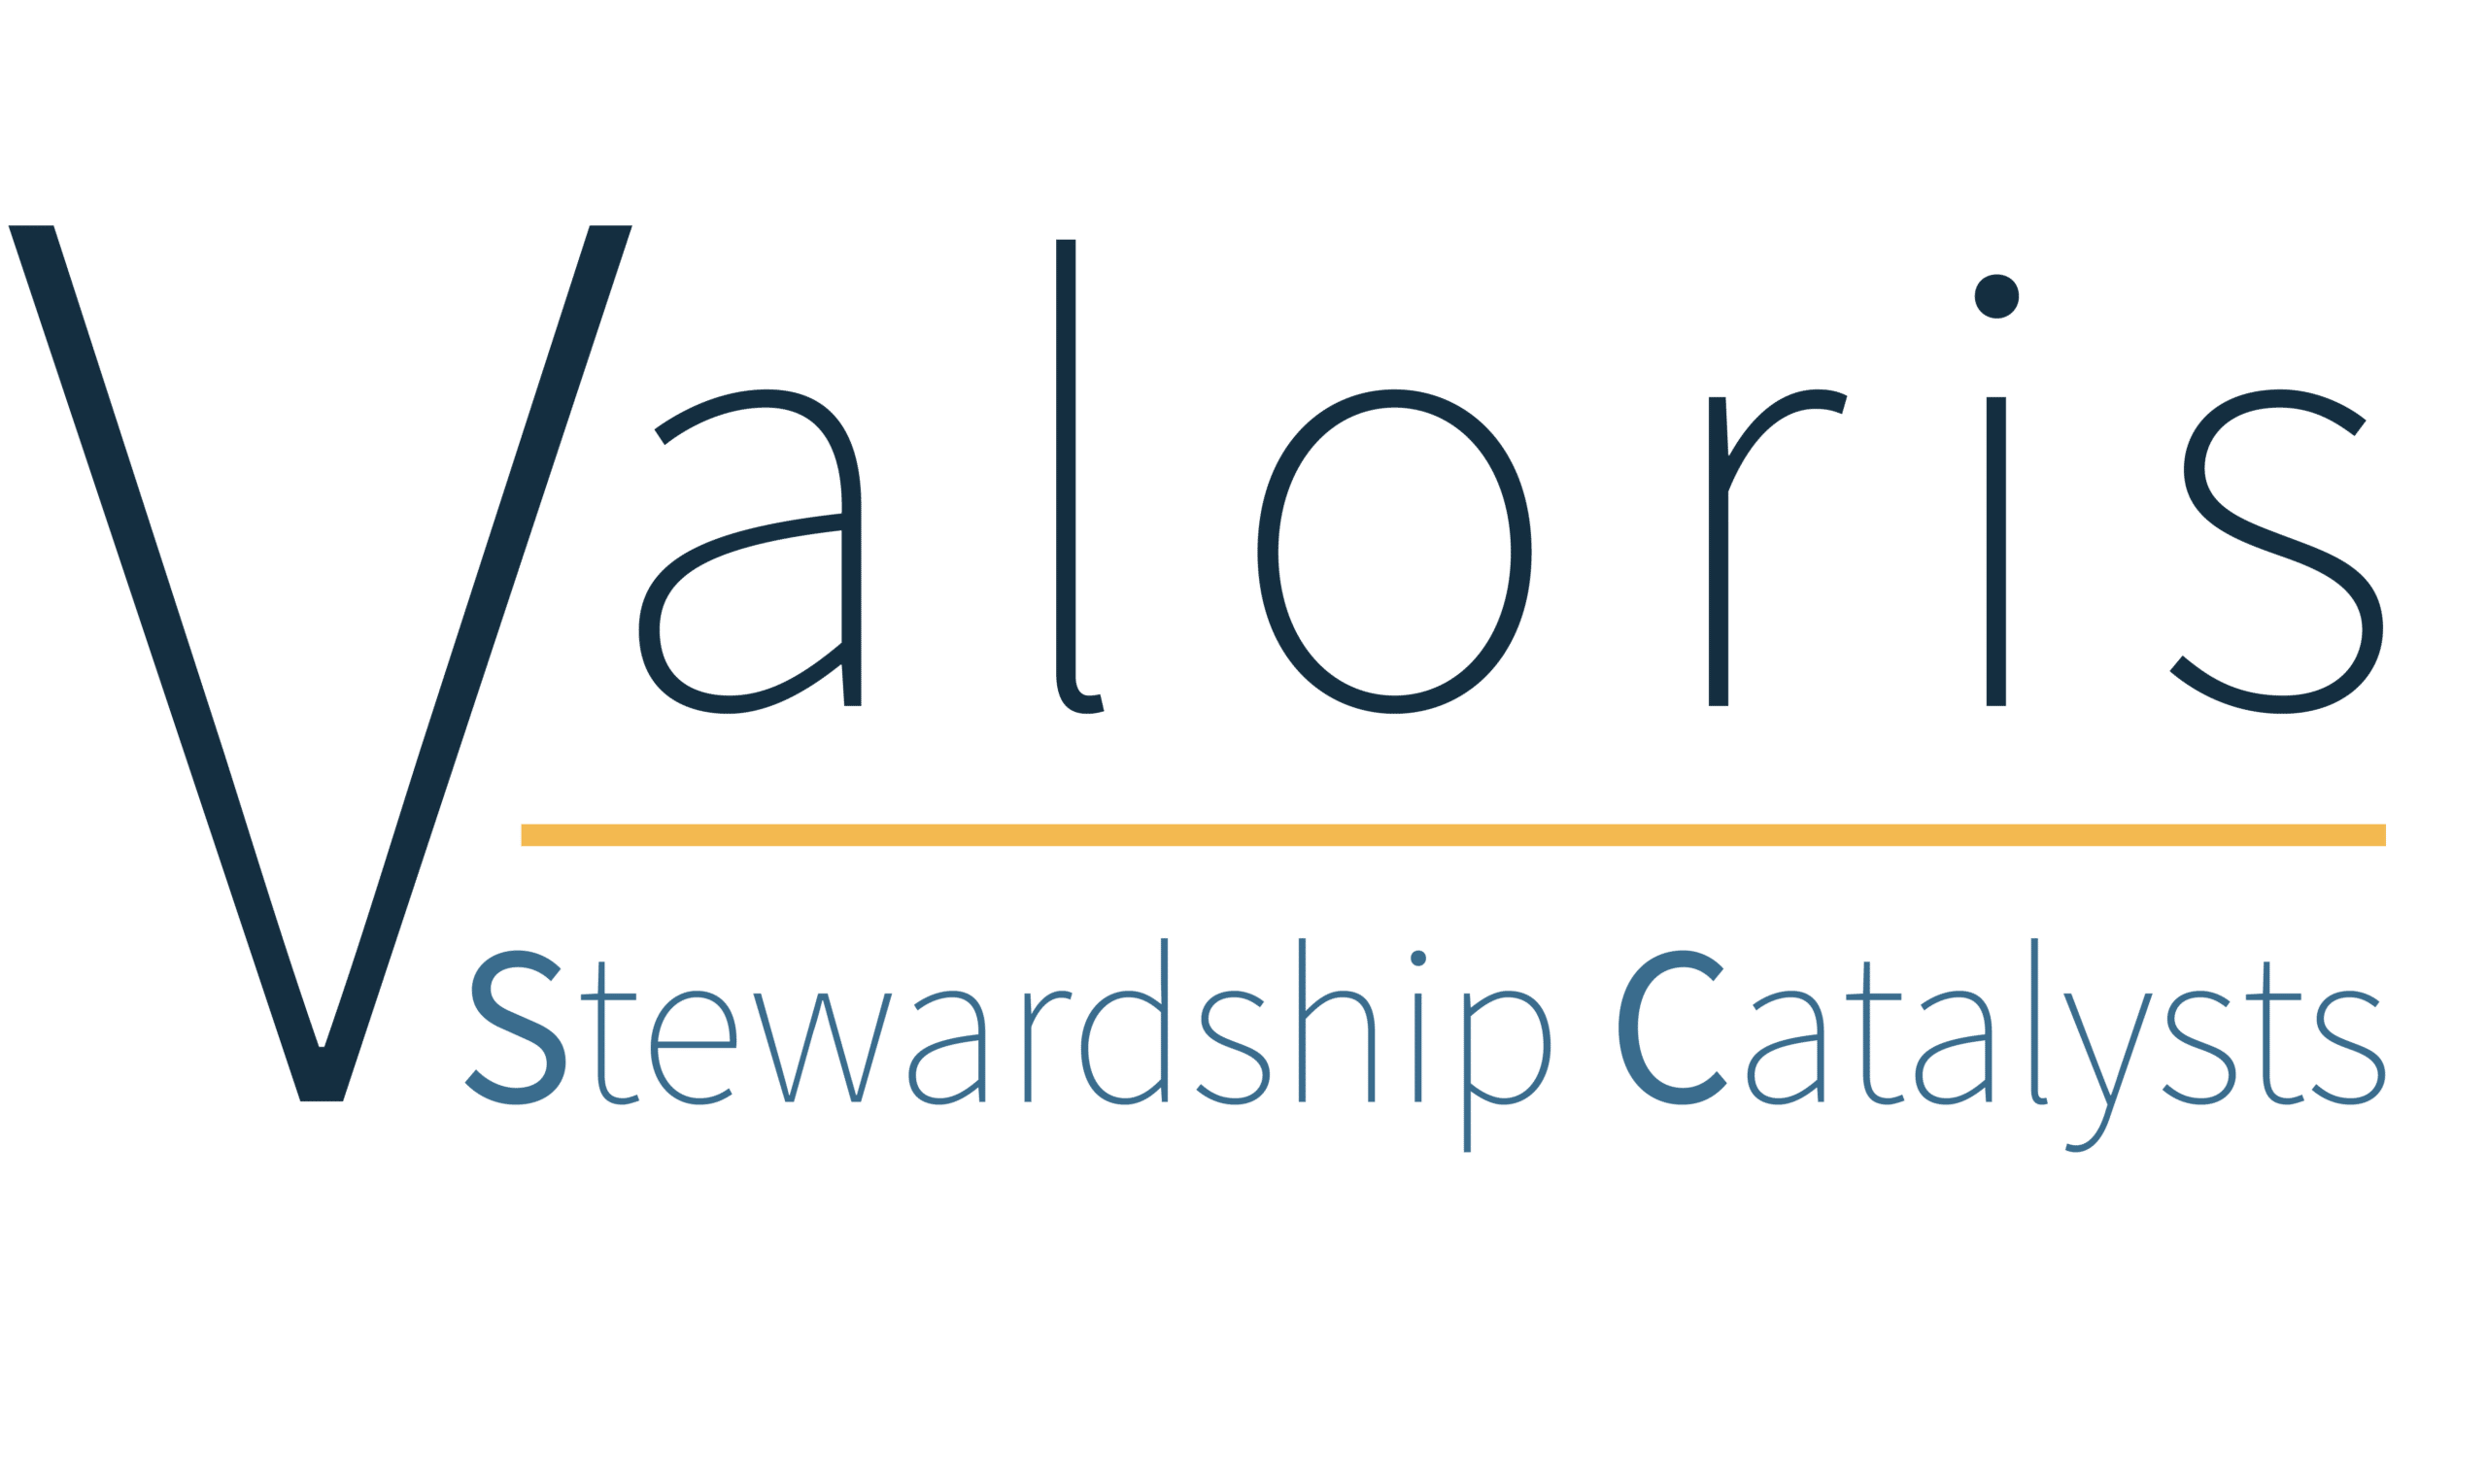 Valoris Stewardship Catalysts